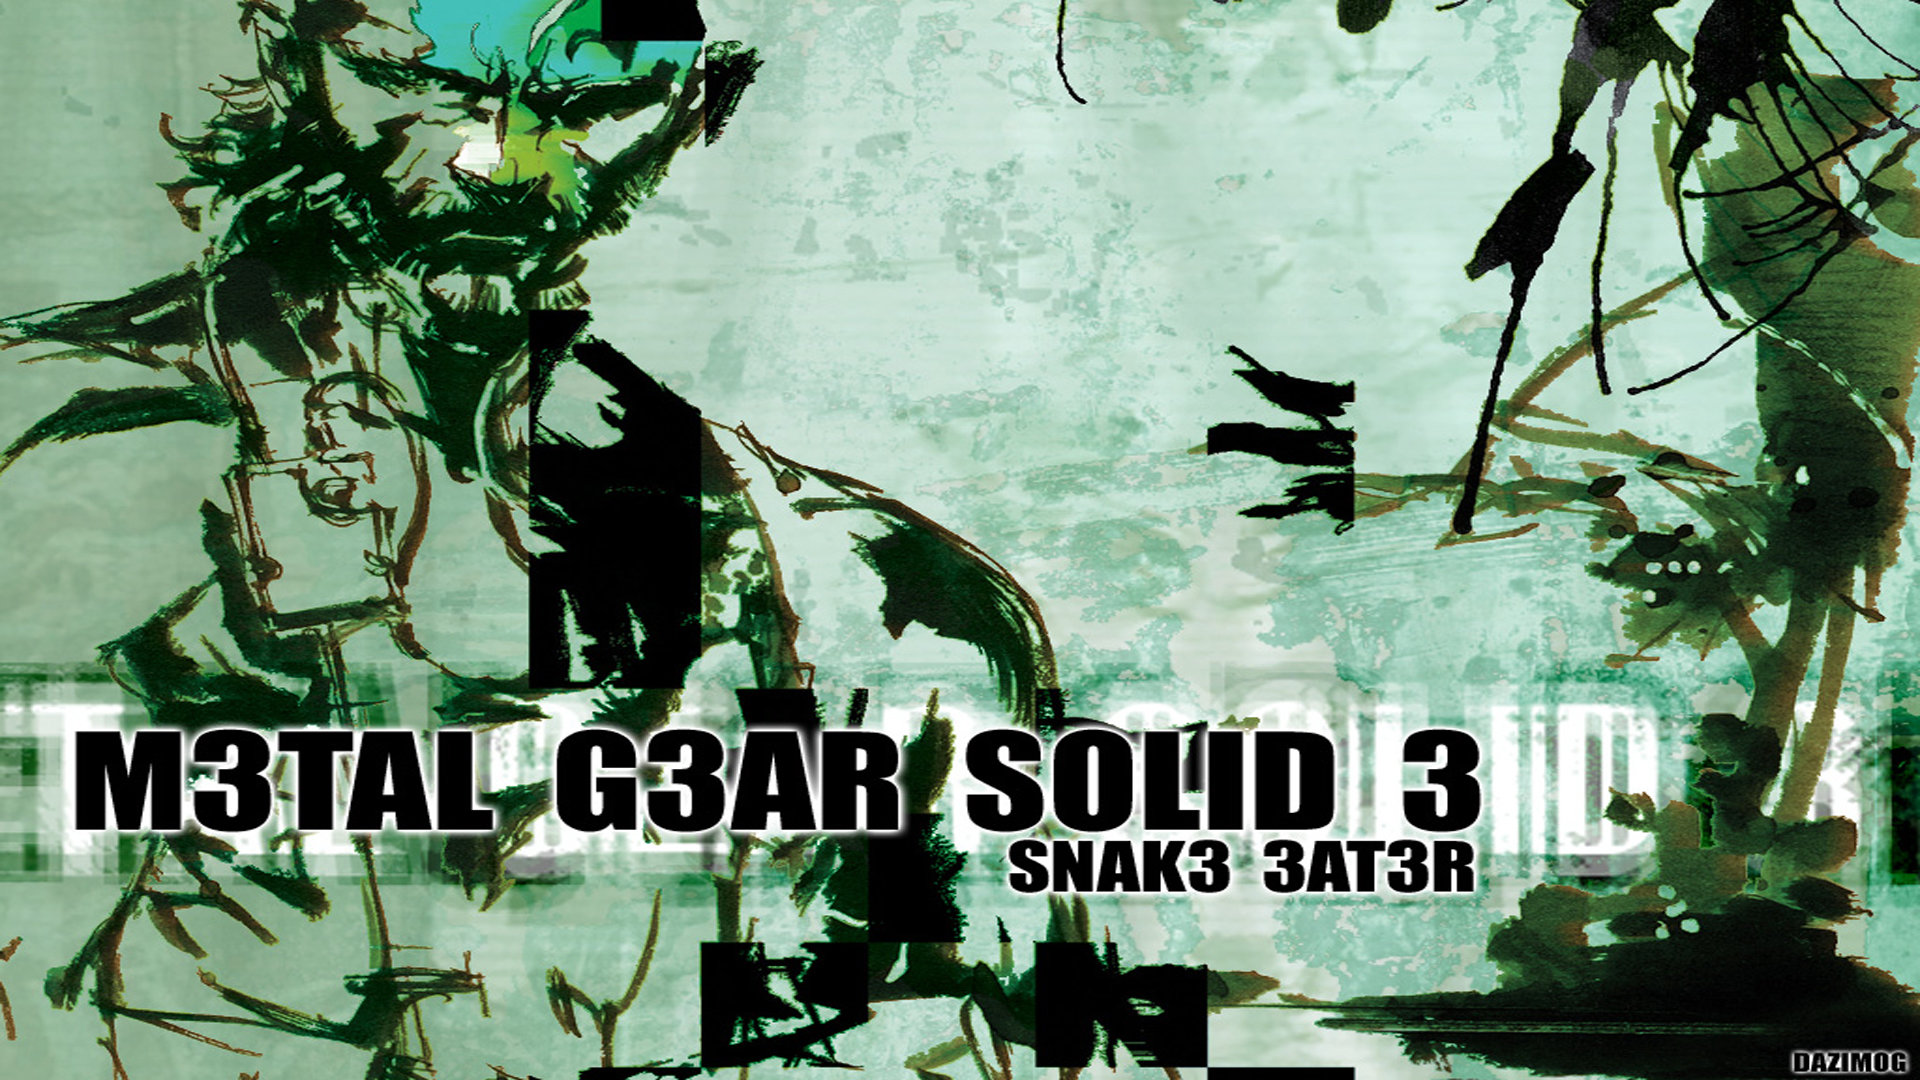 Download full hd 1920x1080 Metal Gear Solid 3: Snake Eater (MGS 3) desktop wallpaper ID:294562 for free